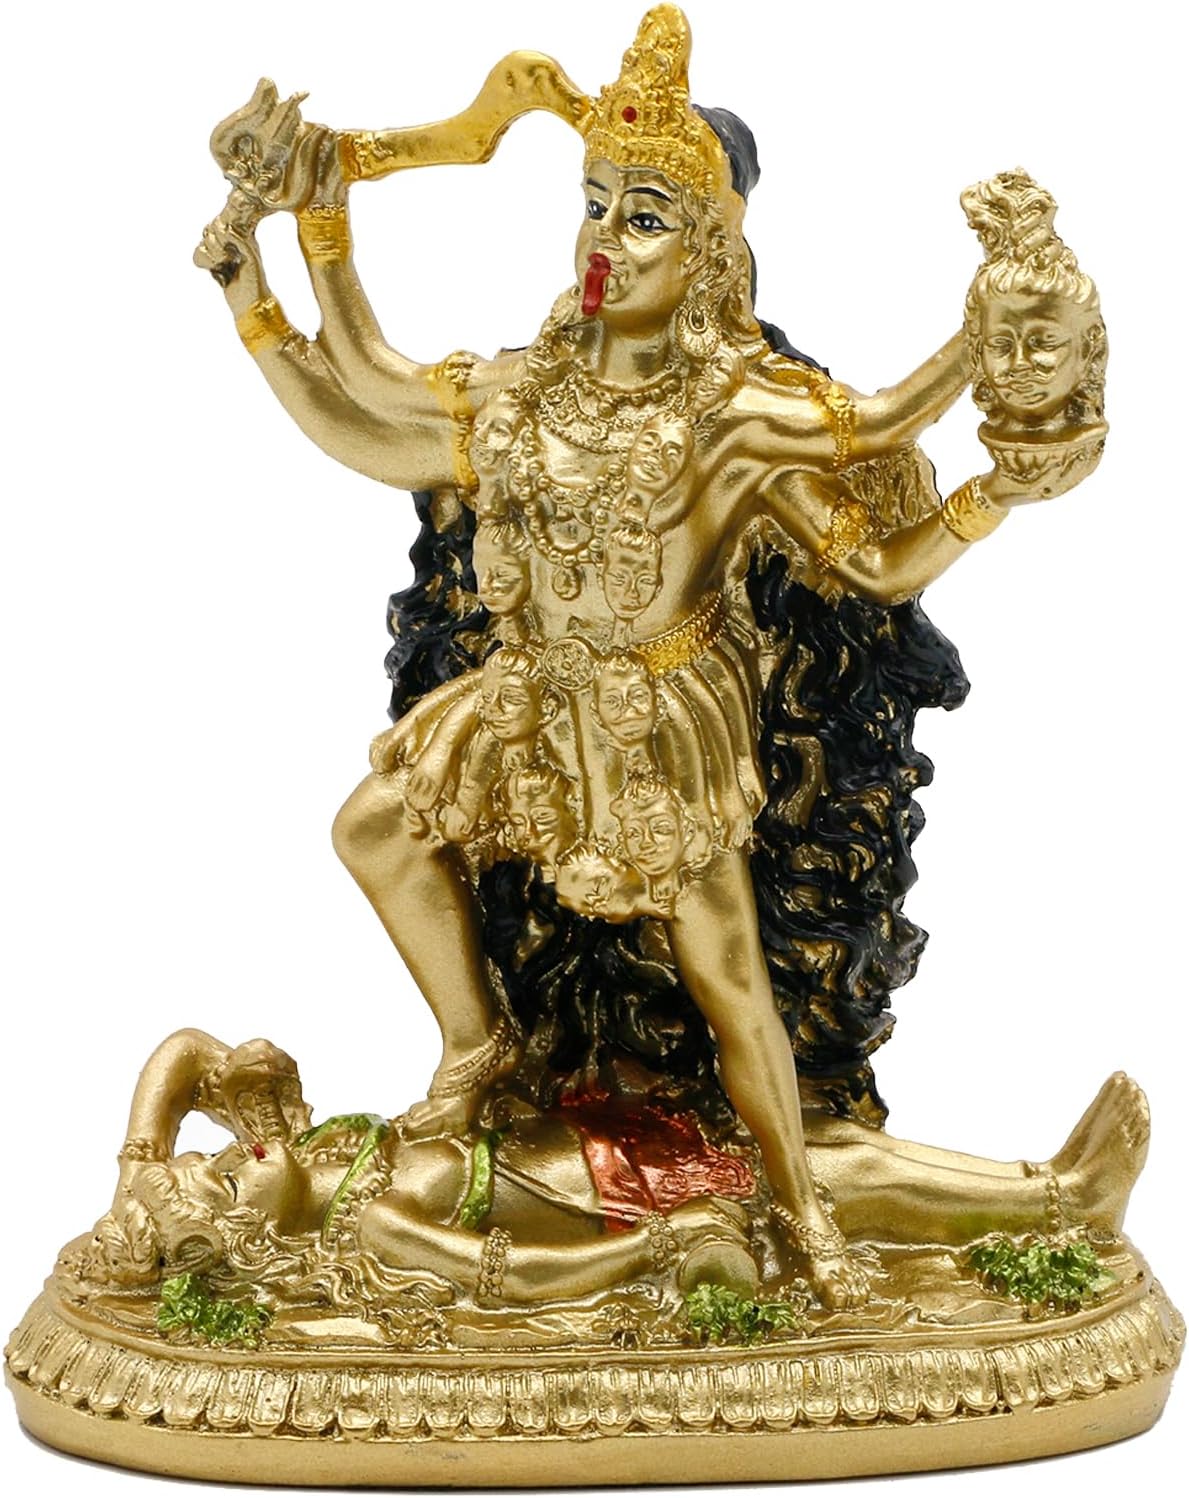 Antique Gold Hindu God Kali Statue – Indian Idol Murti Pooja Item Kali Maa Figurine Home Temple Mandir Decor Religion Puja Decoration Item